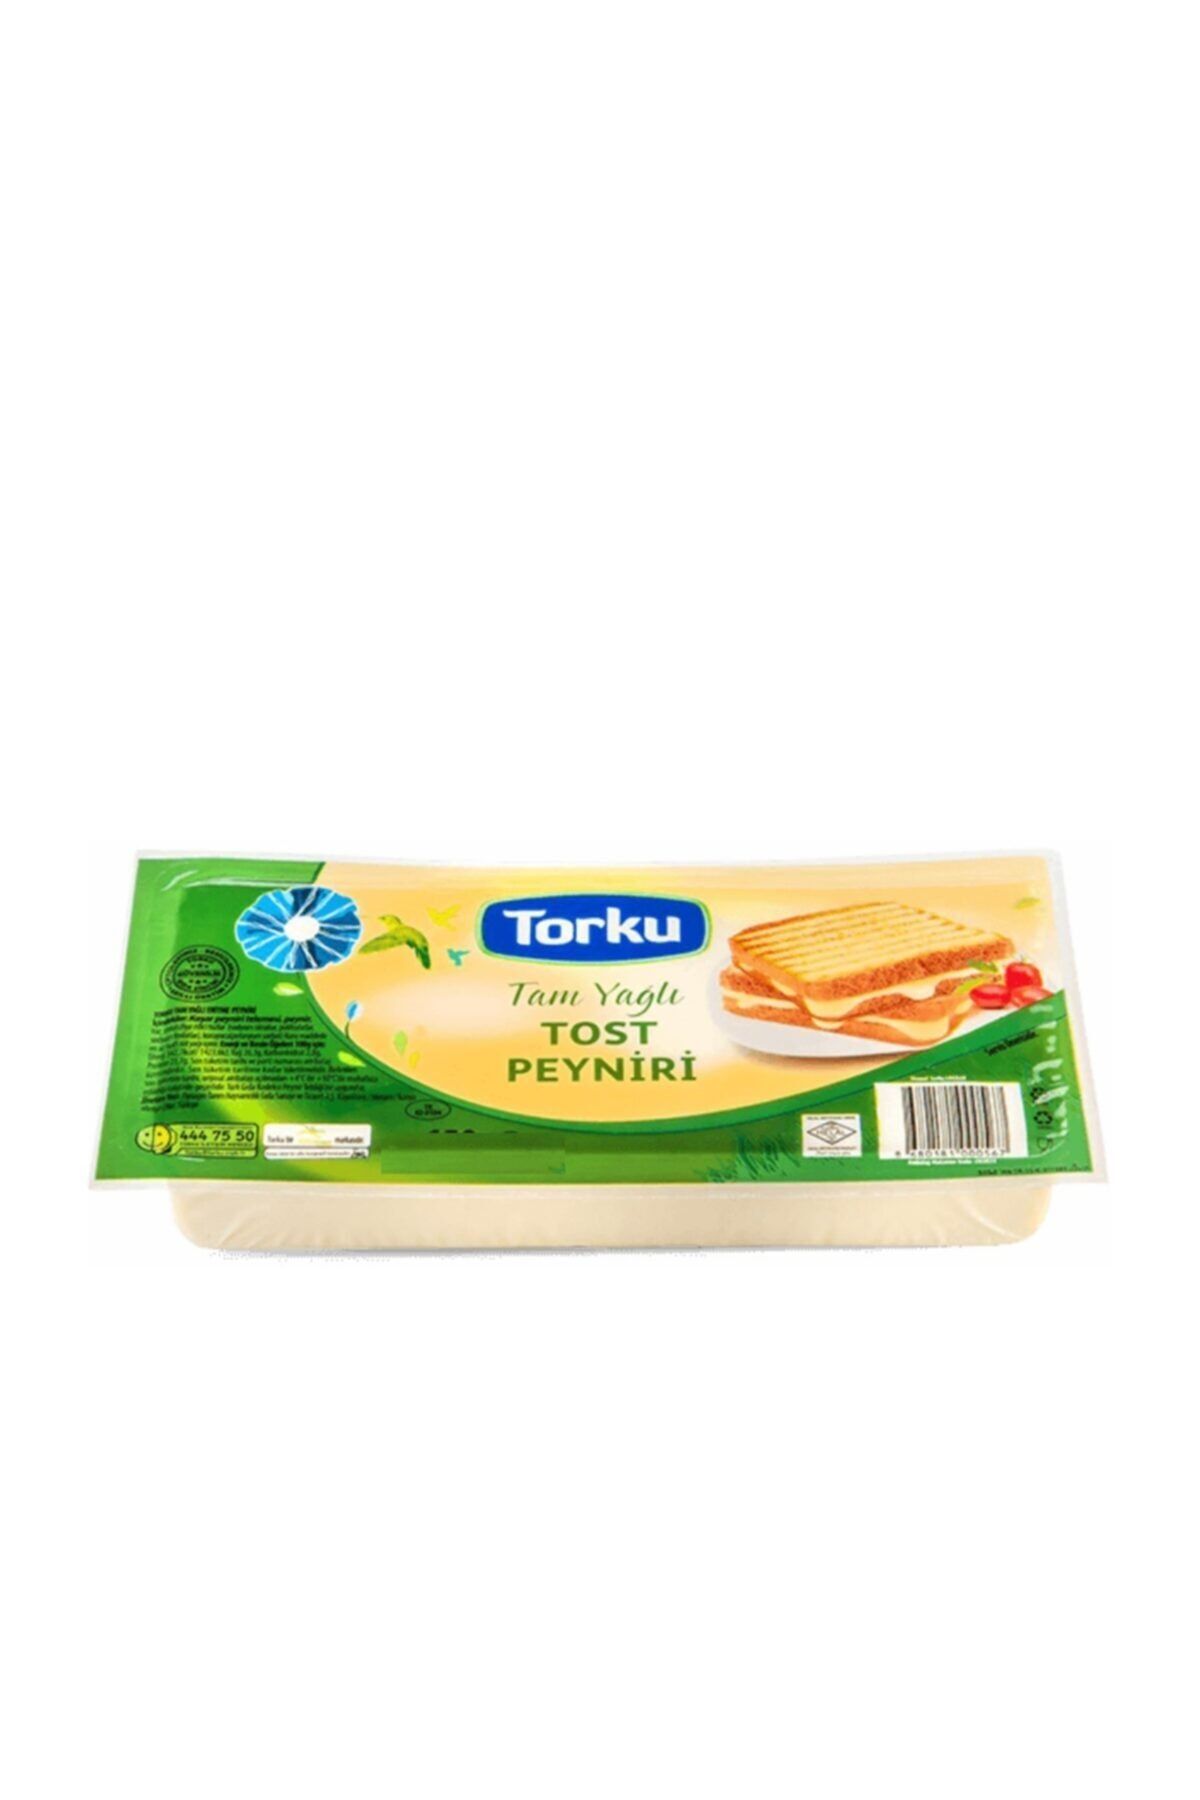 Torku Tam Yağlı Tost Peyniri 600gr